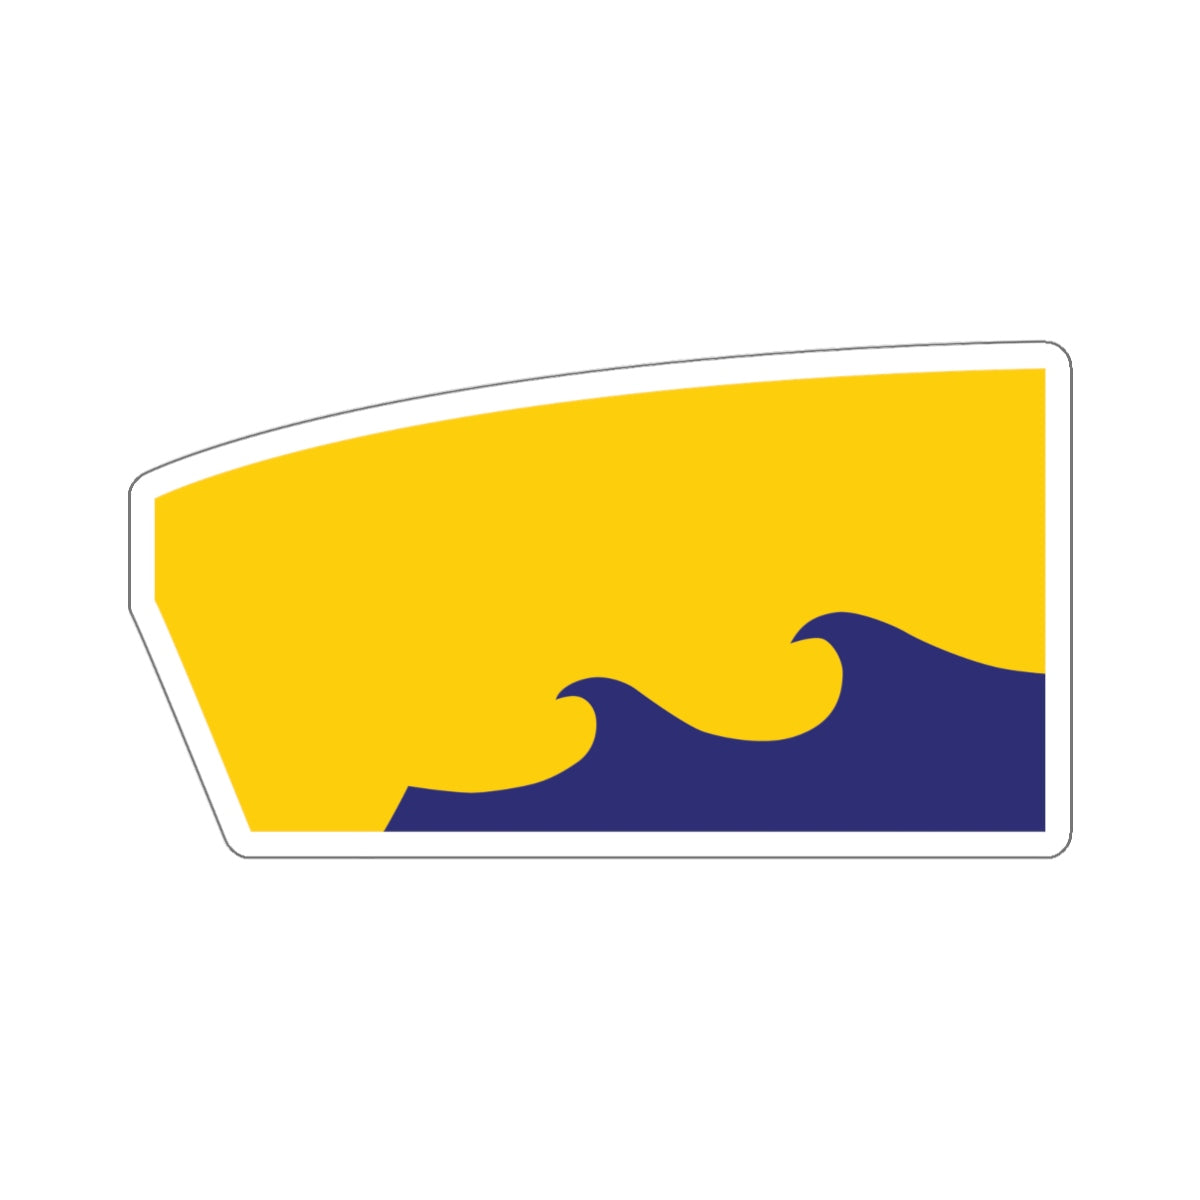 Oregon Association of Rowers Sticker